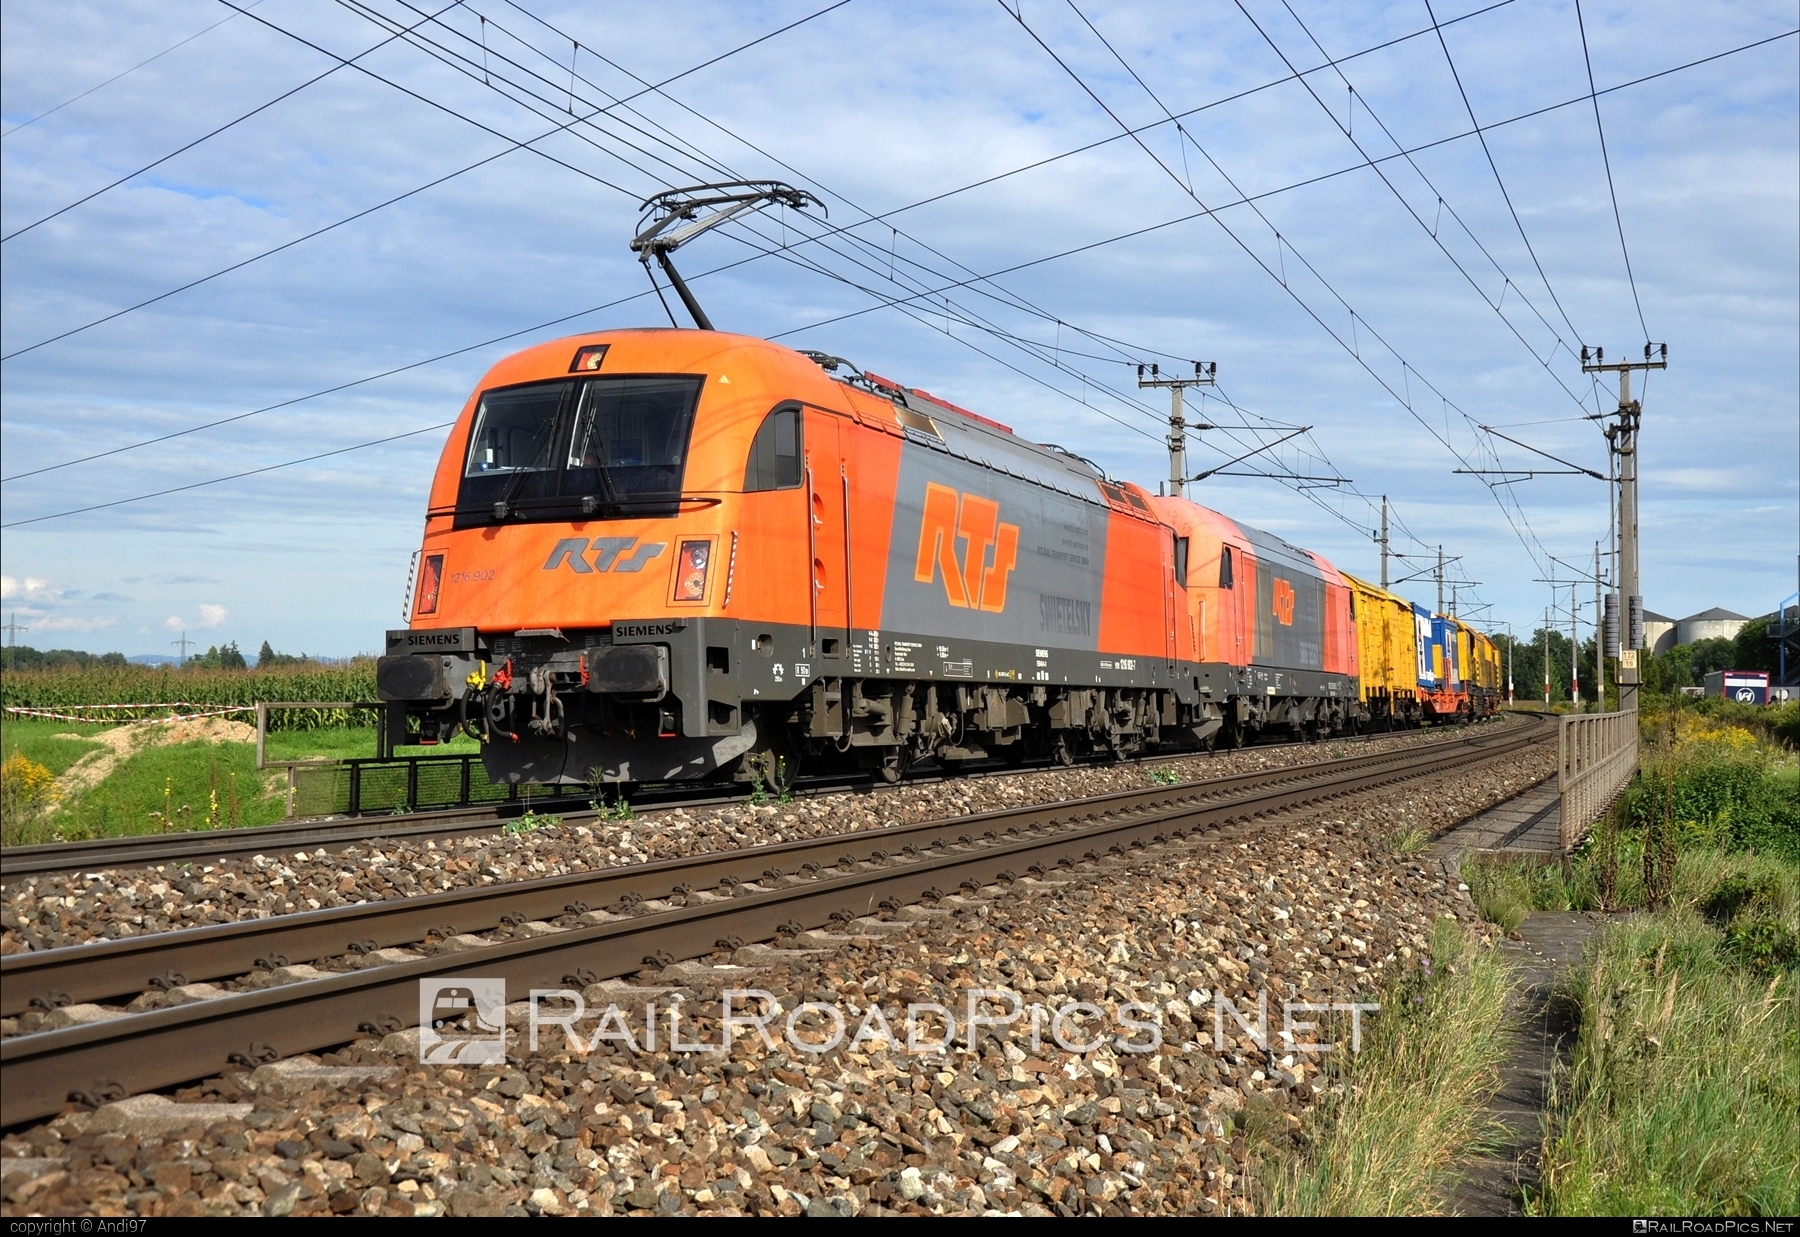 Siemens ES 64 U4 - 1216 902 operated by RTS Rail Transport Service GmbH #es64 #es64u4 #eurosprinter #railtransportservicegmbh #rts #rtsrailtransportservice #siemens #siemensEs64 #siemensEs64u4 #siemenstaurus #swietelsky #taurus #tauruslocomotive